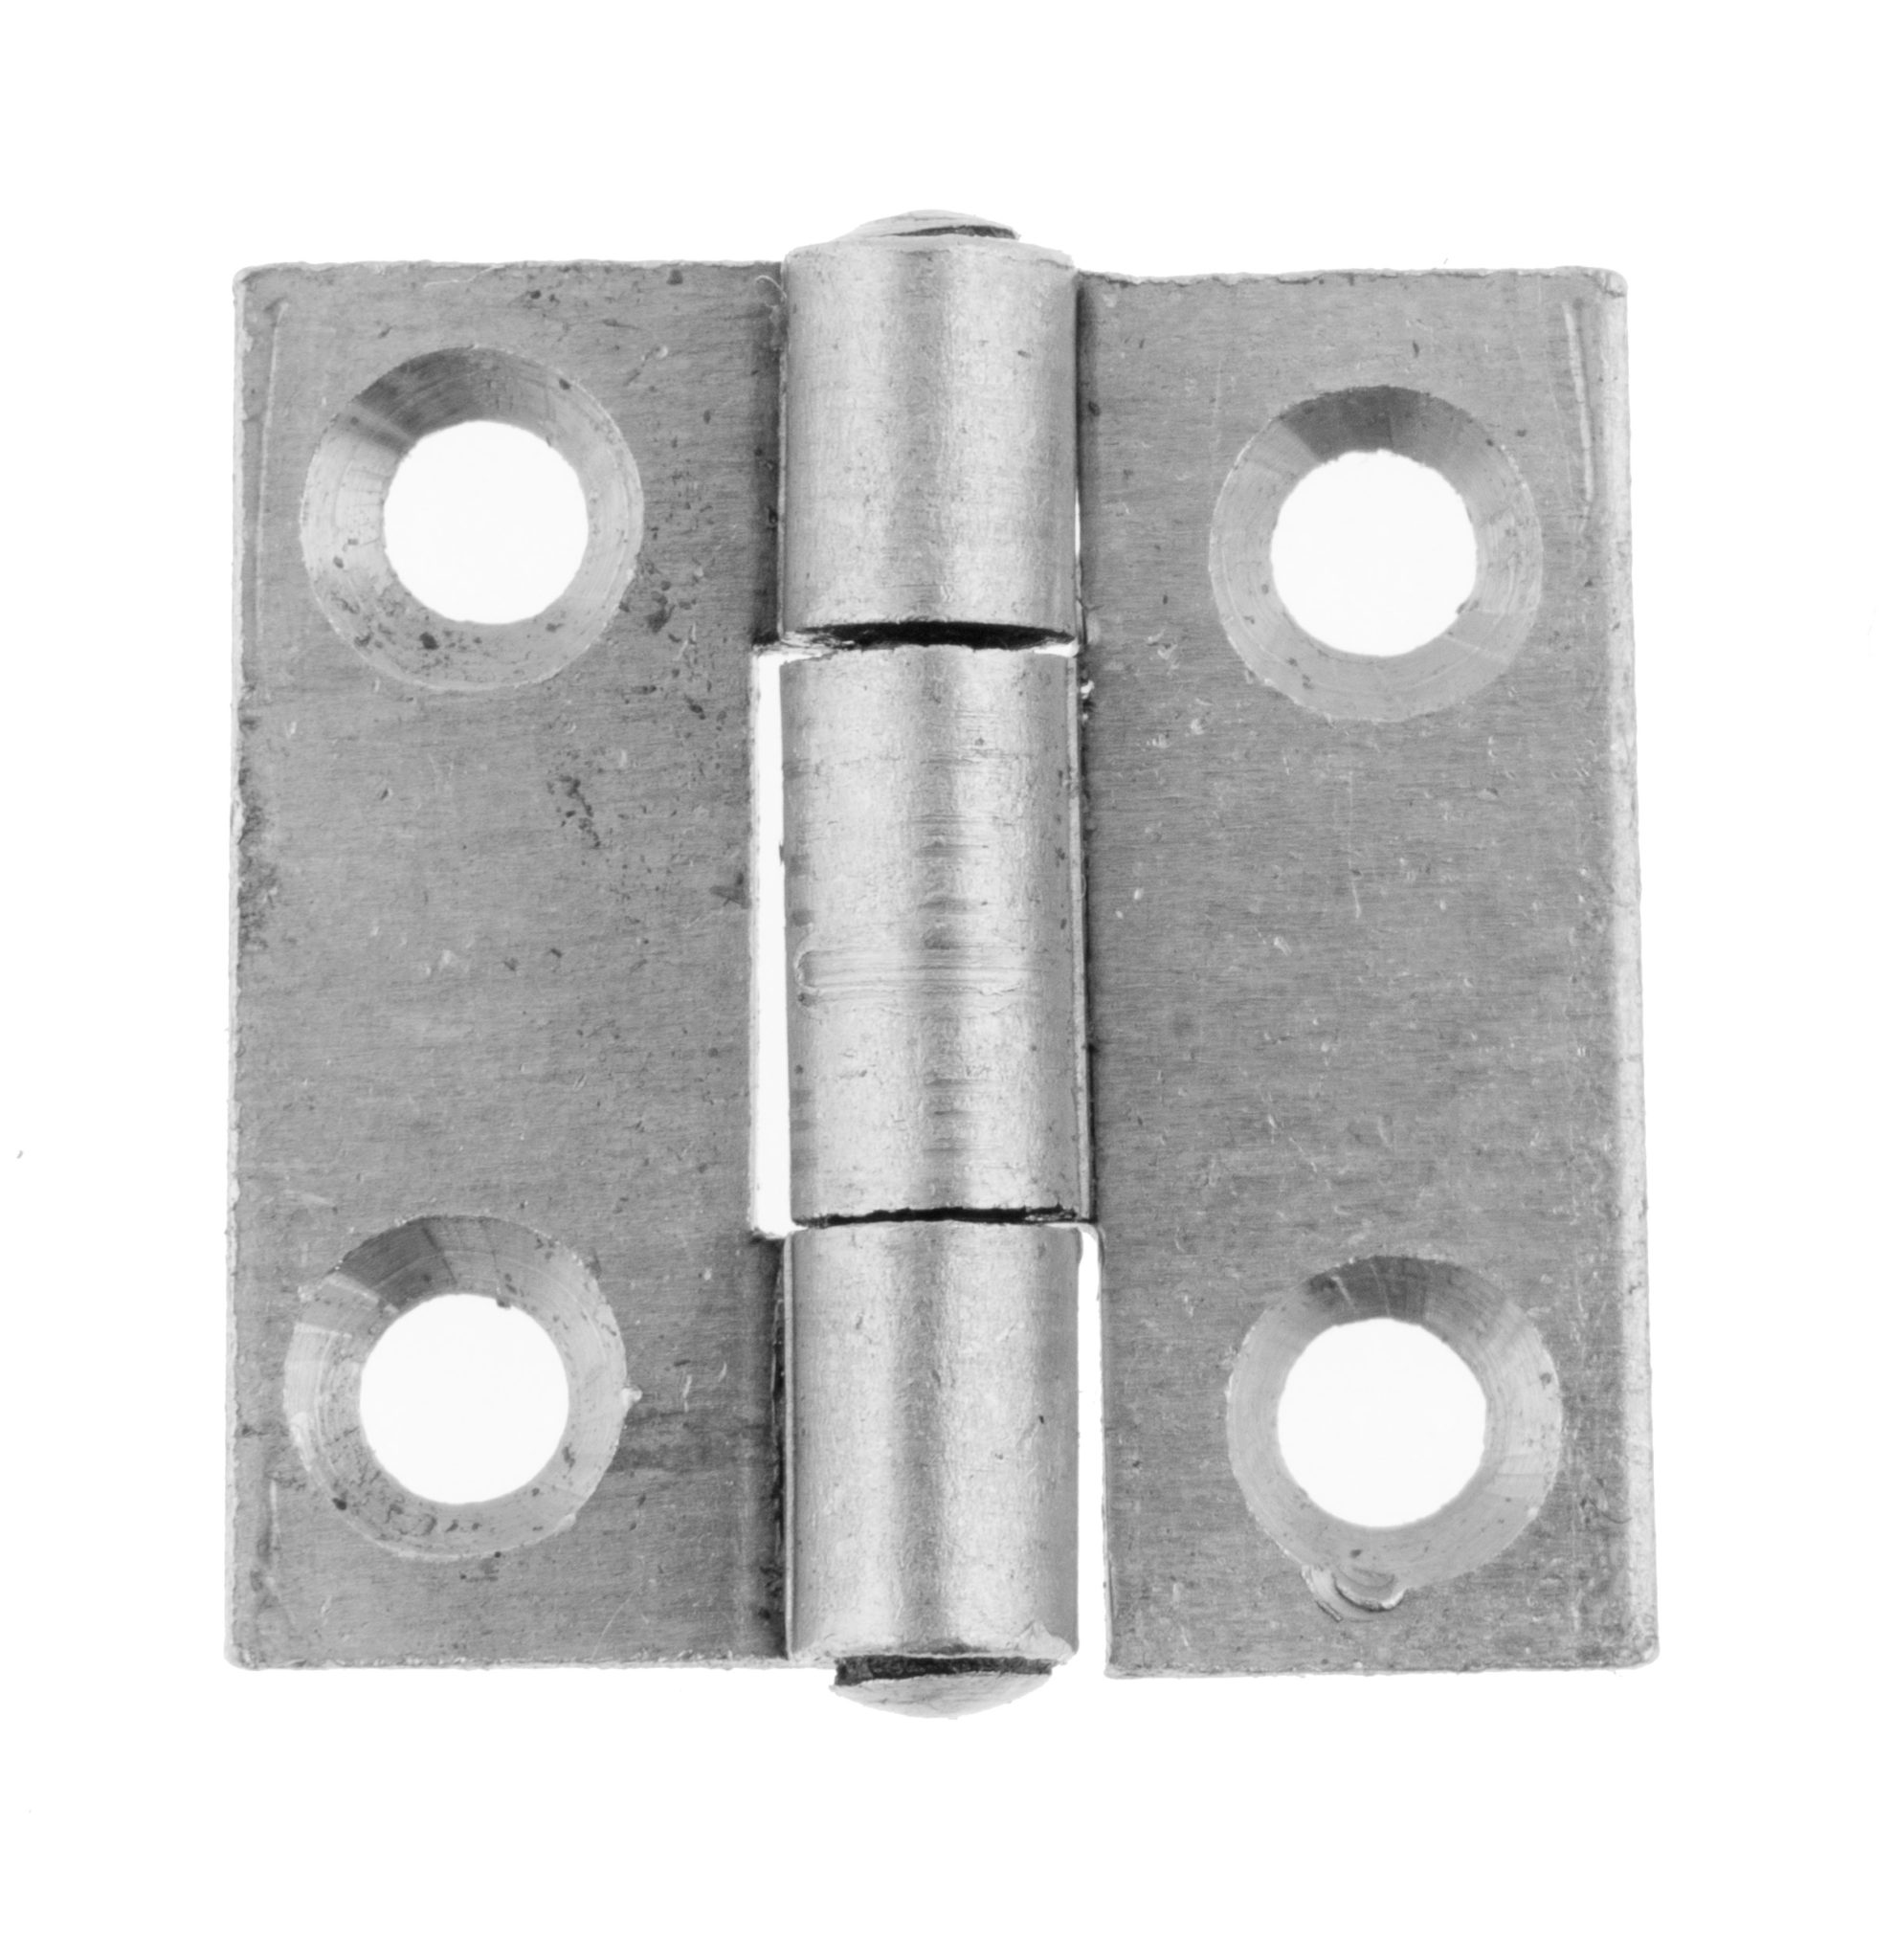 1838 pattern steel fixed pin butt hinge - Eclipse